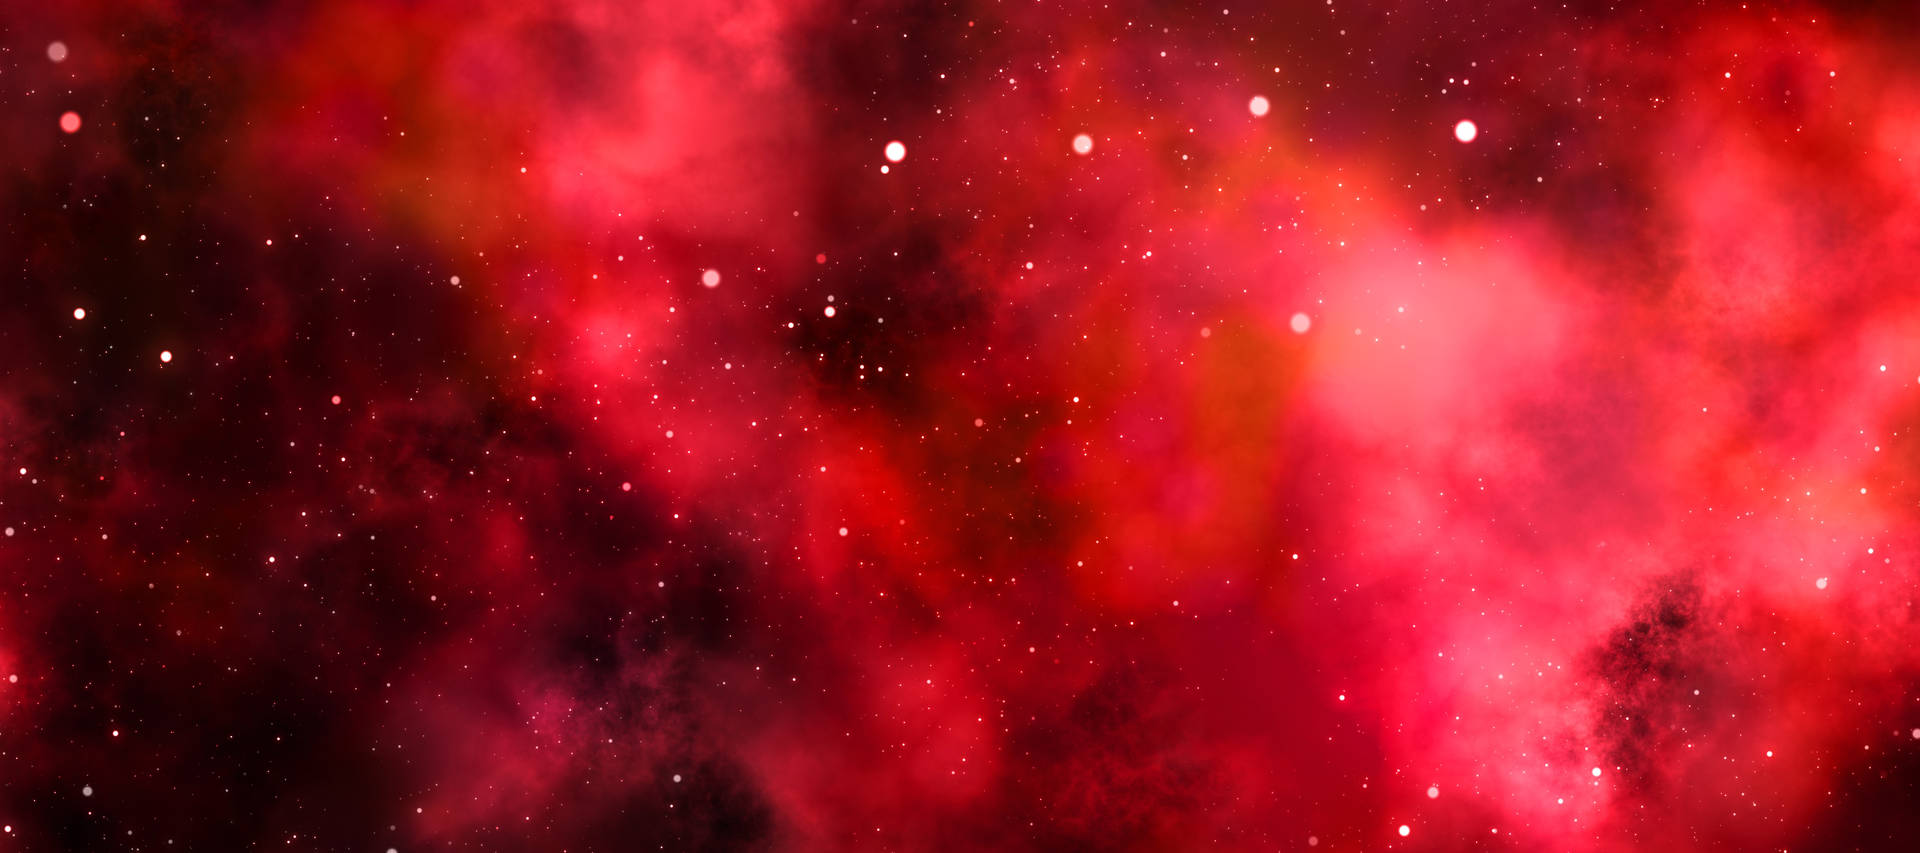 Red Cosmic Dust Galaxy